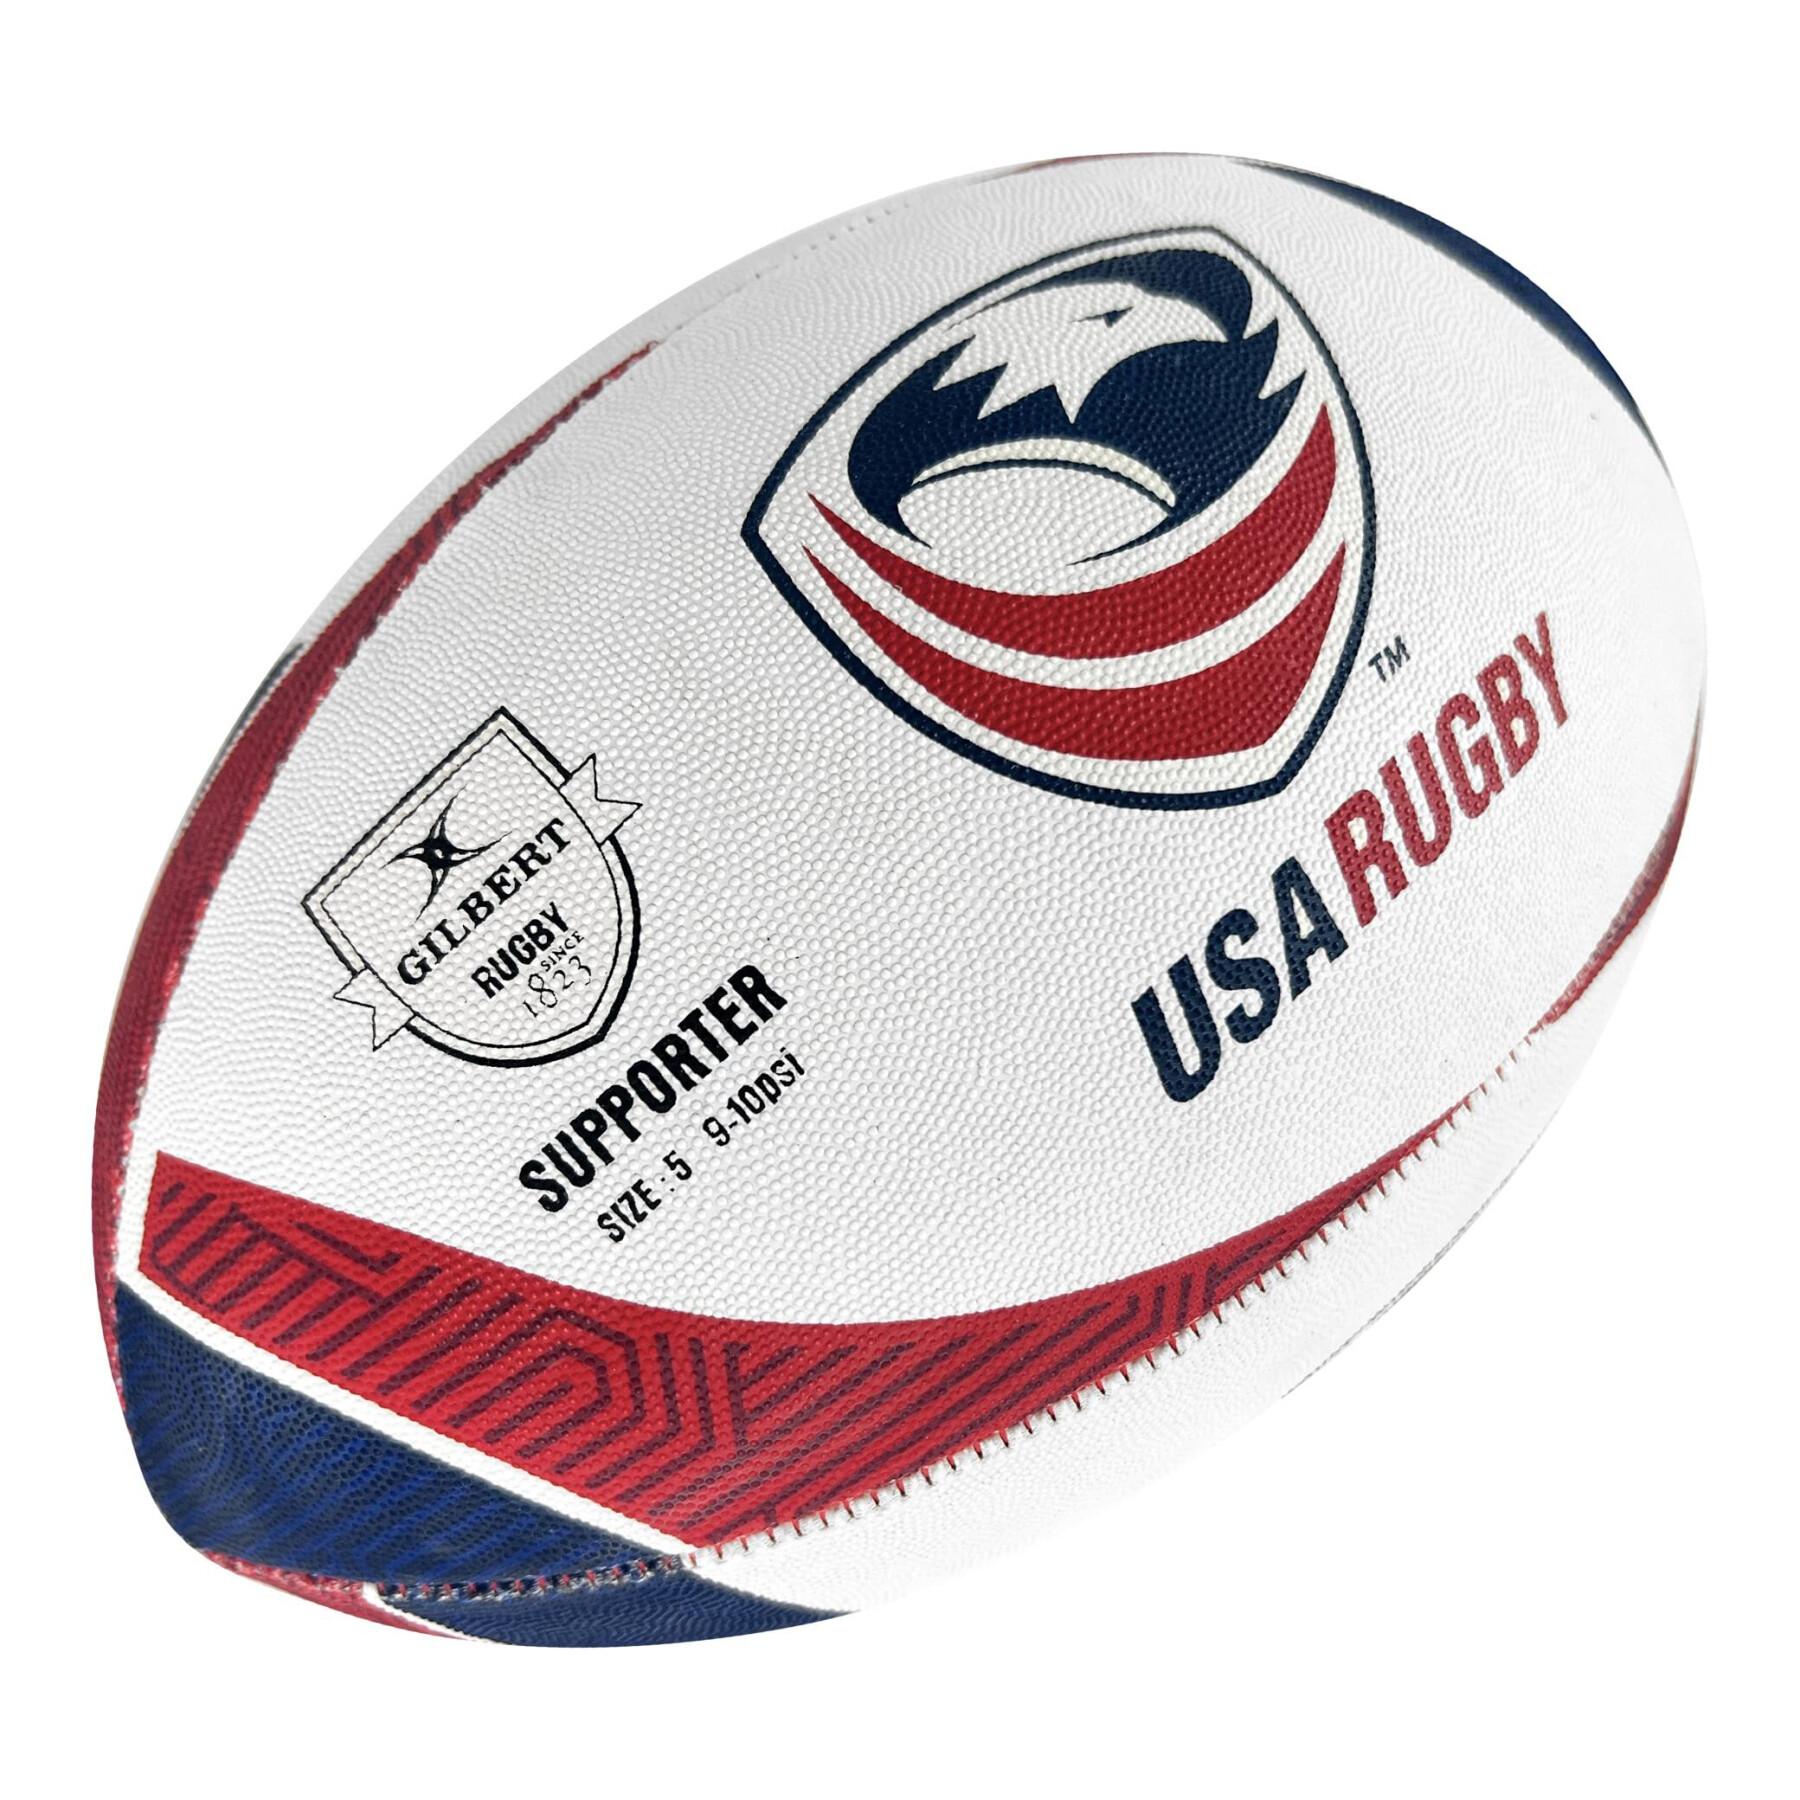 Rugby ball USA 2021/22